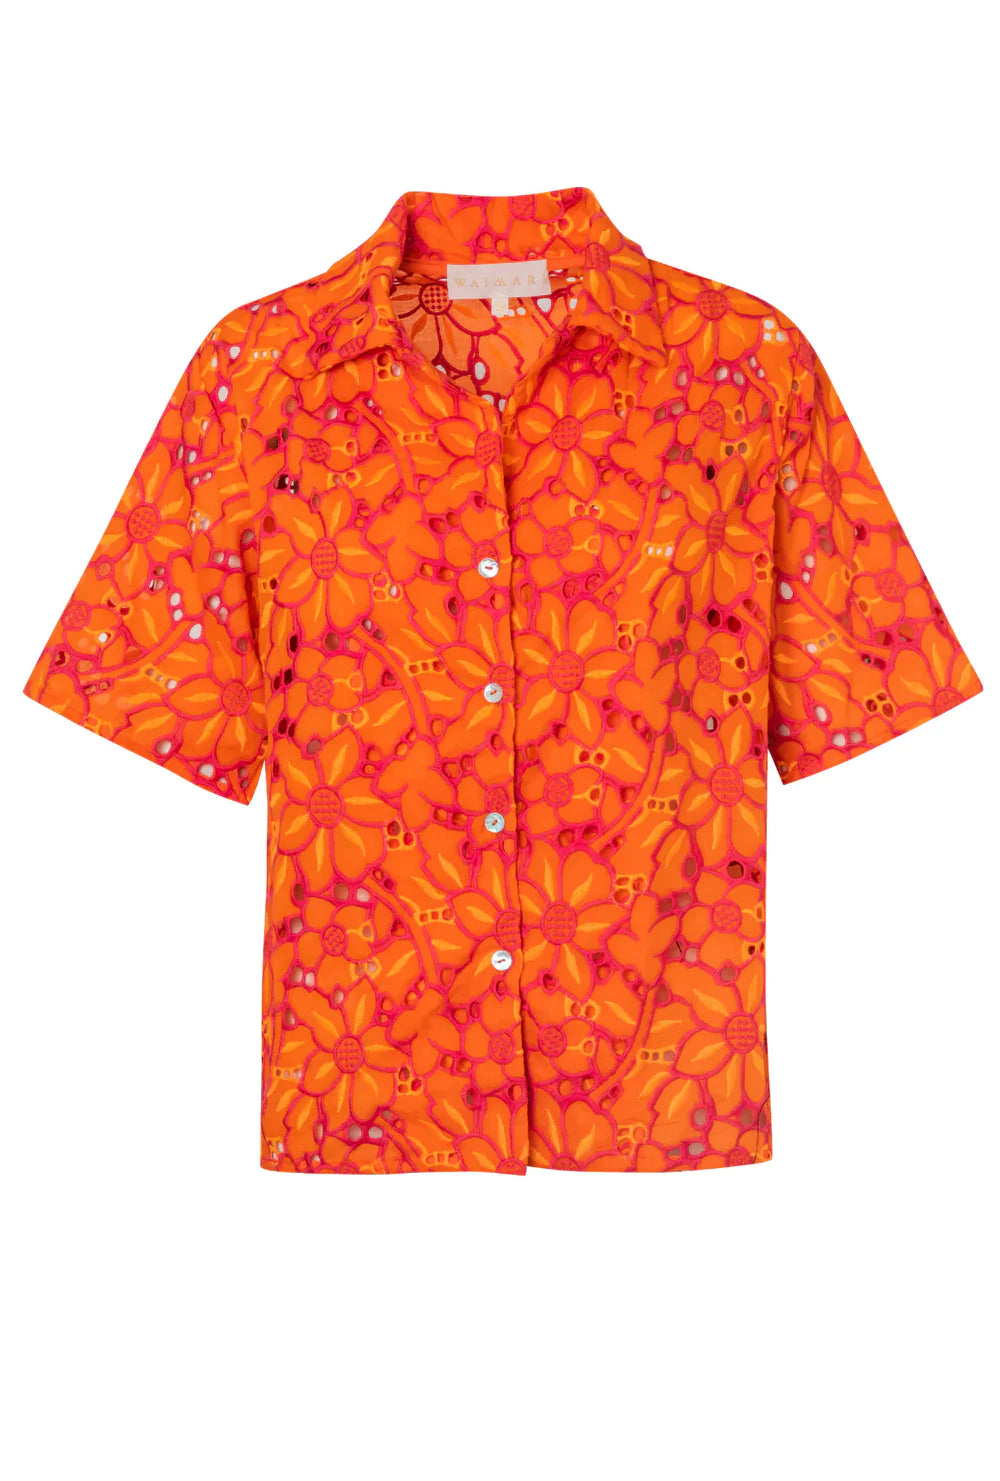 Waimari Juana Shirt - Premium Shirts & Tops from Marina St Barth - Just $225.00! Shop now at Marina St Barth